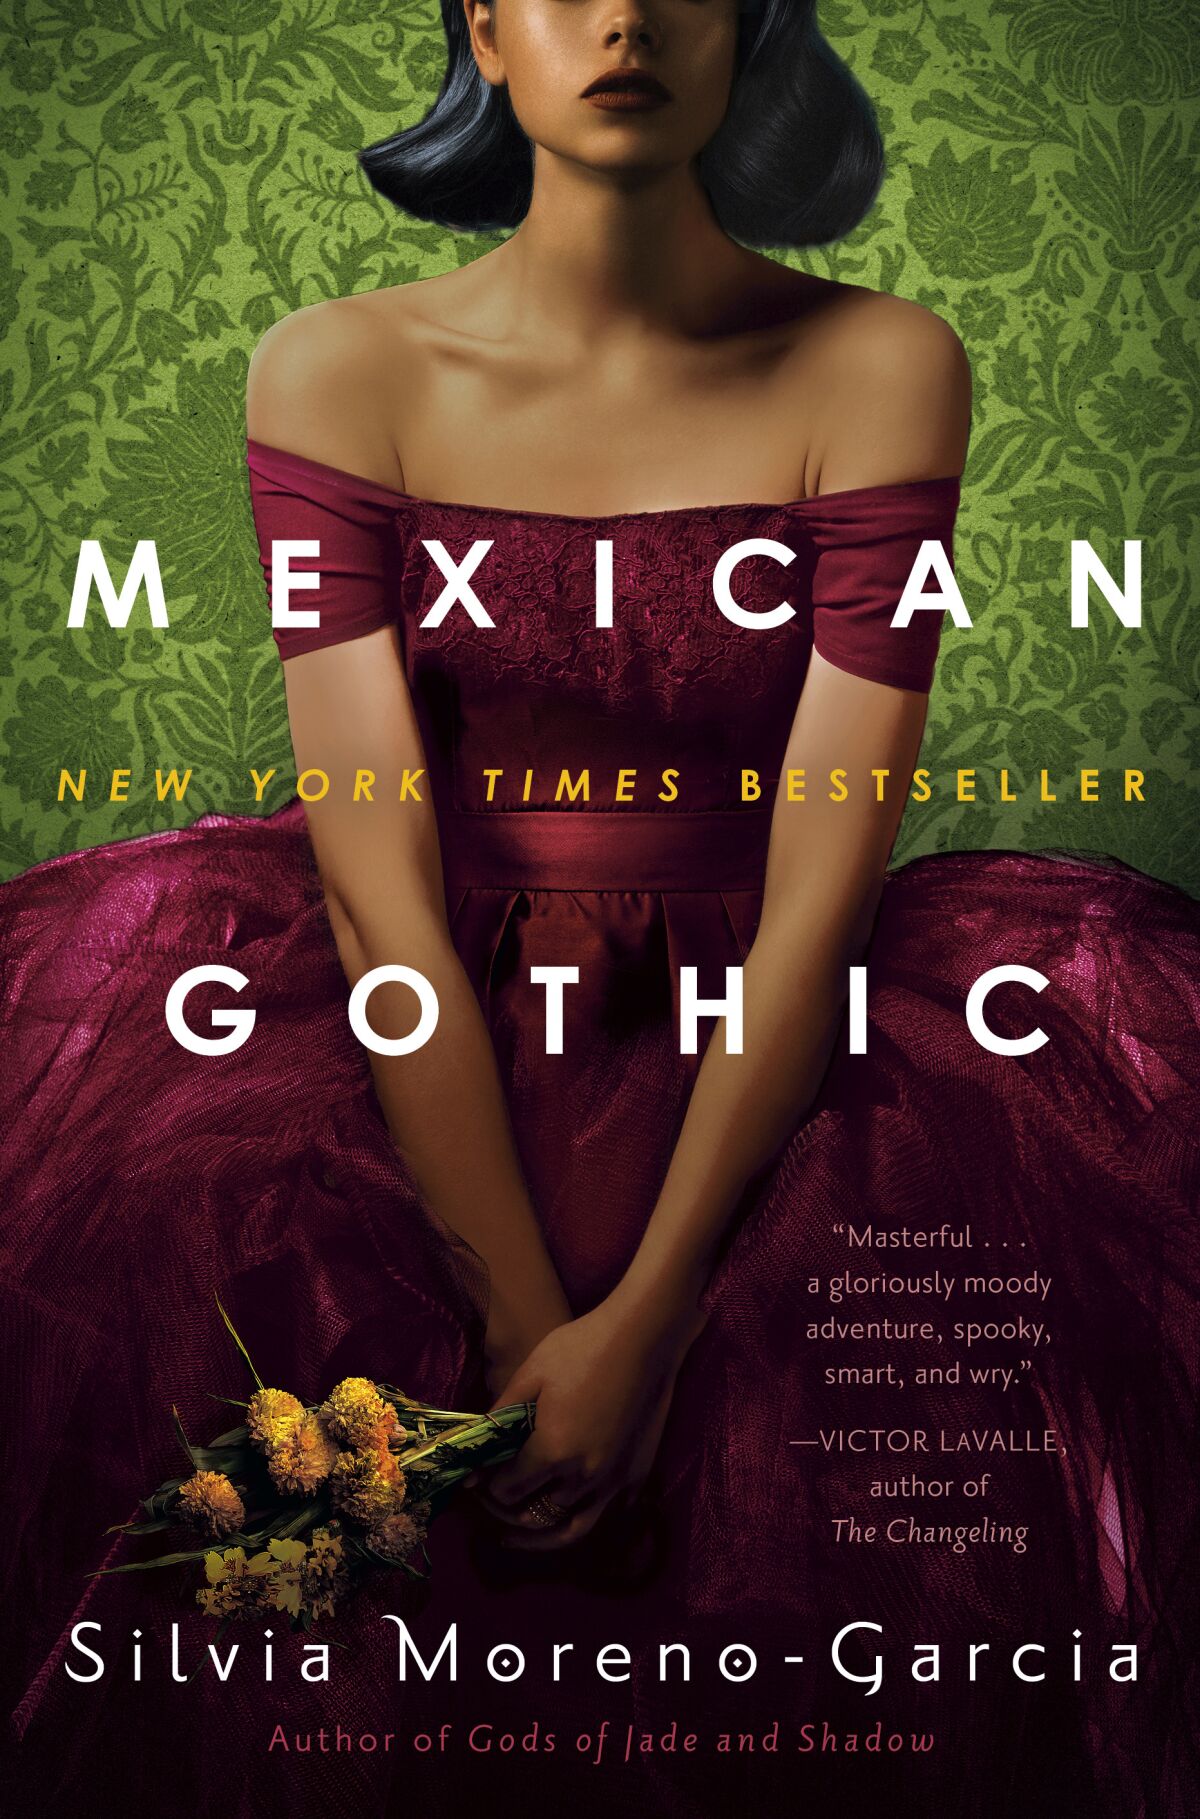 "Mexican Gothic" by Silvia Moreno-García